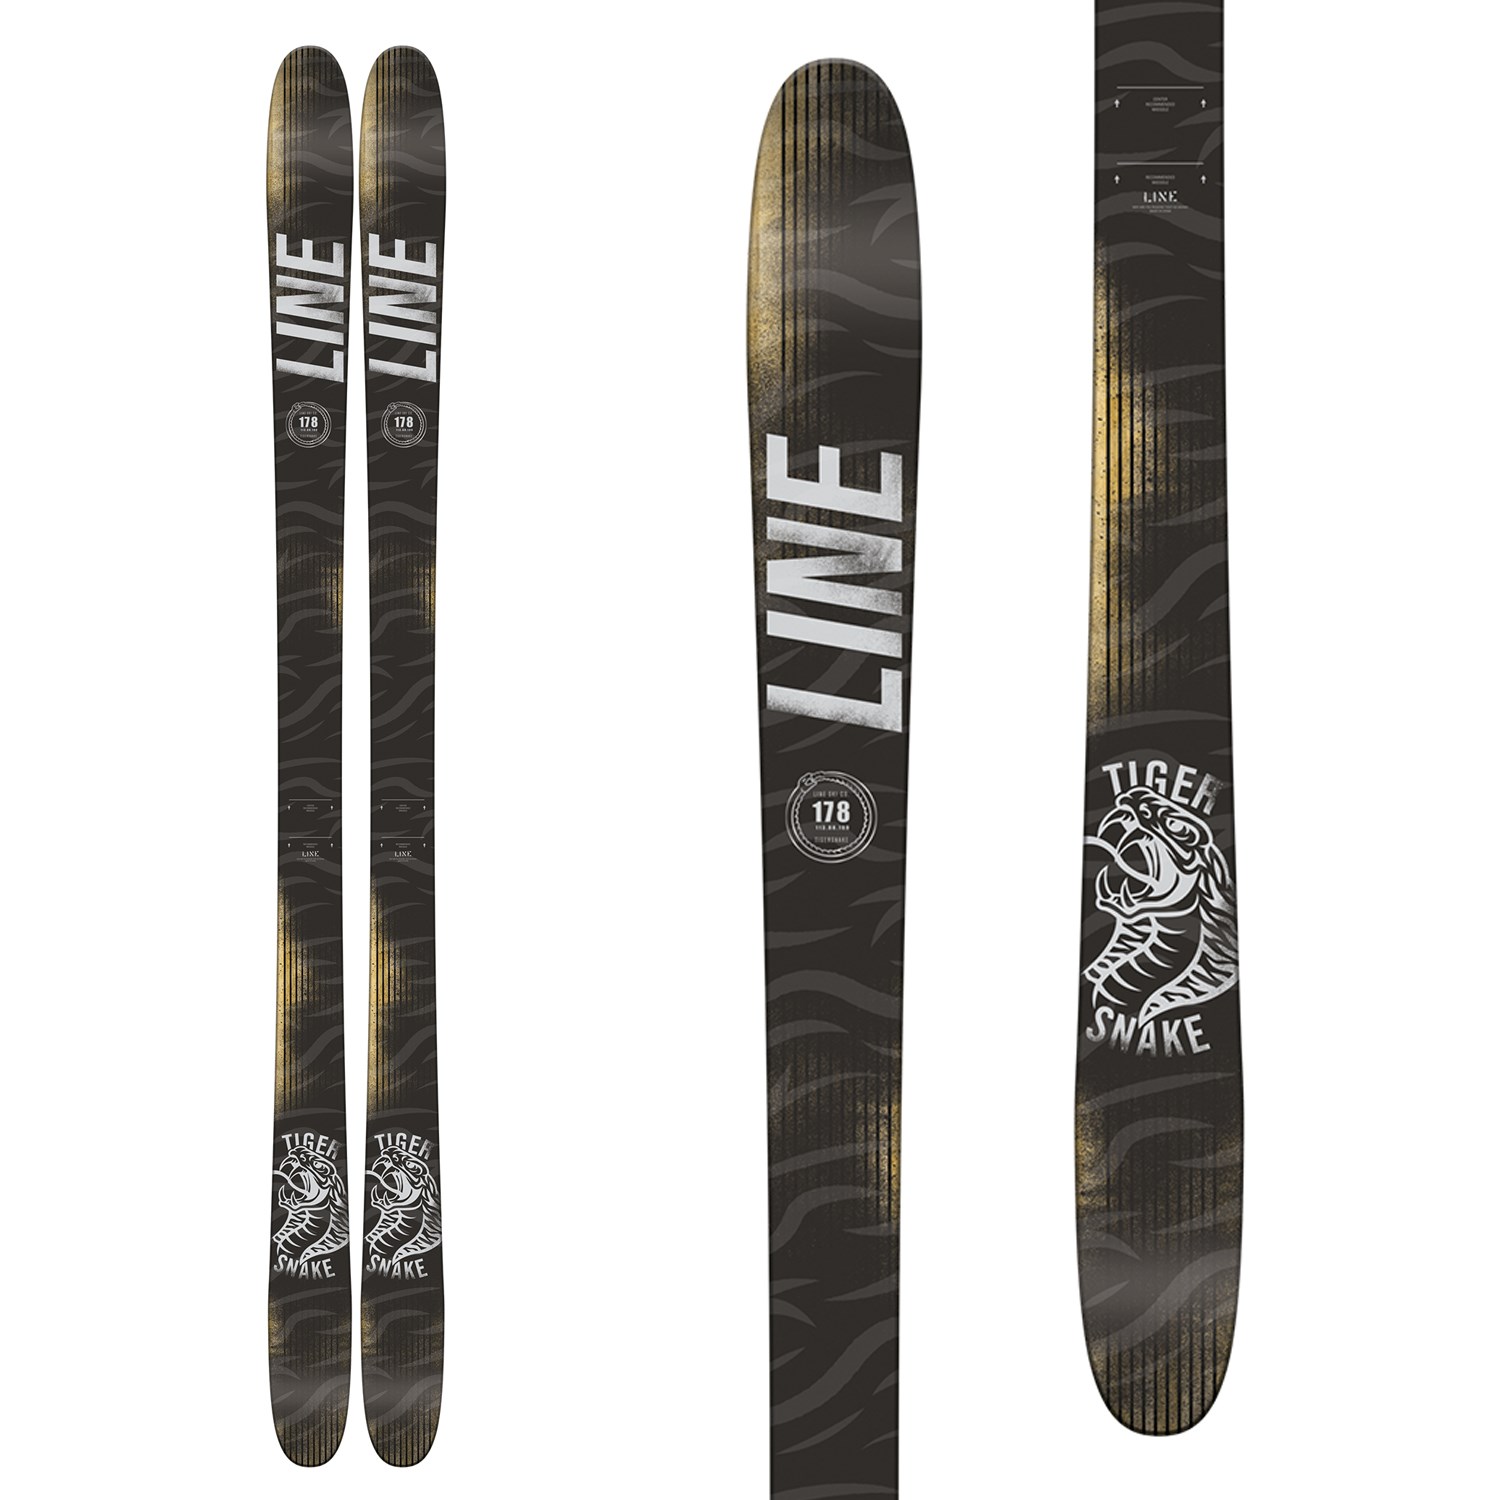 Line Skis Tigersnake Skis 2017 | evo